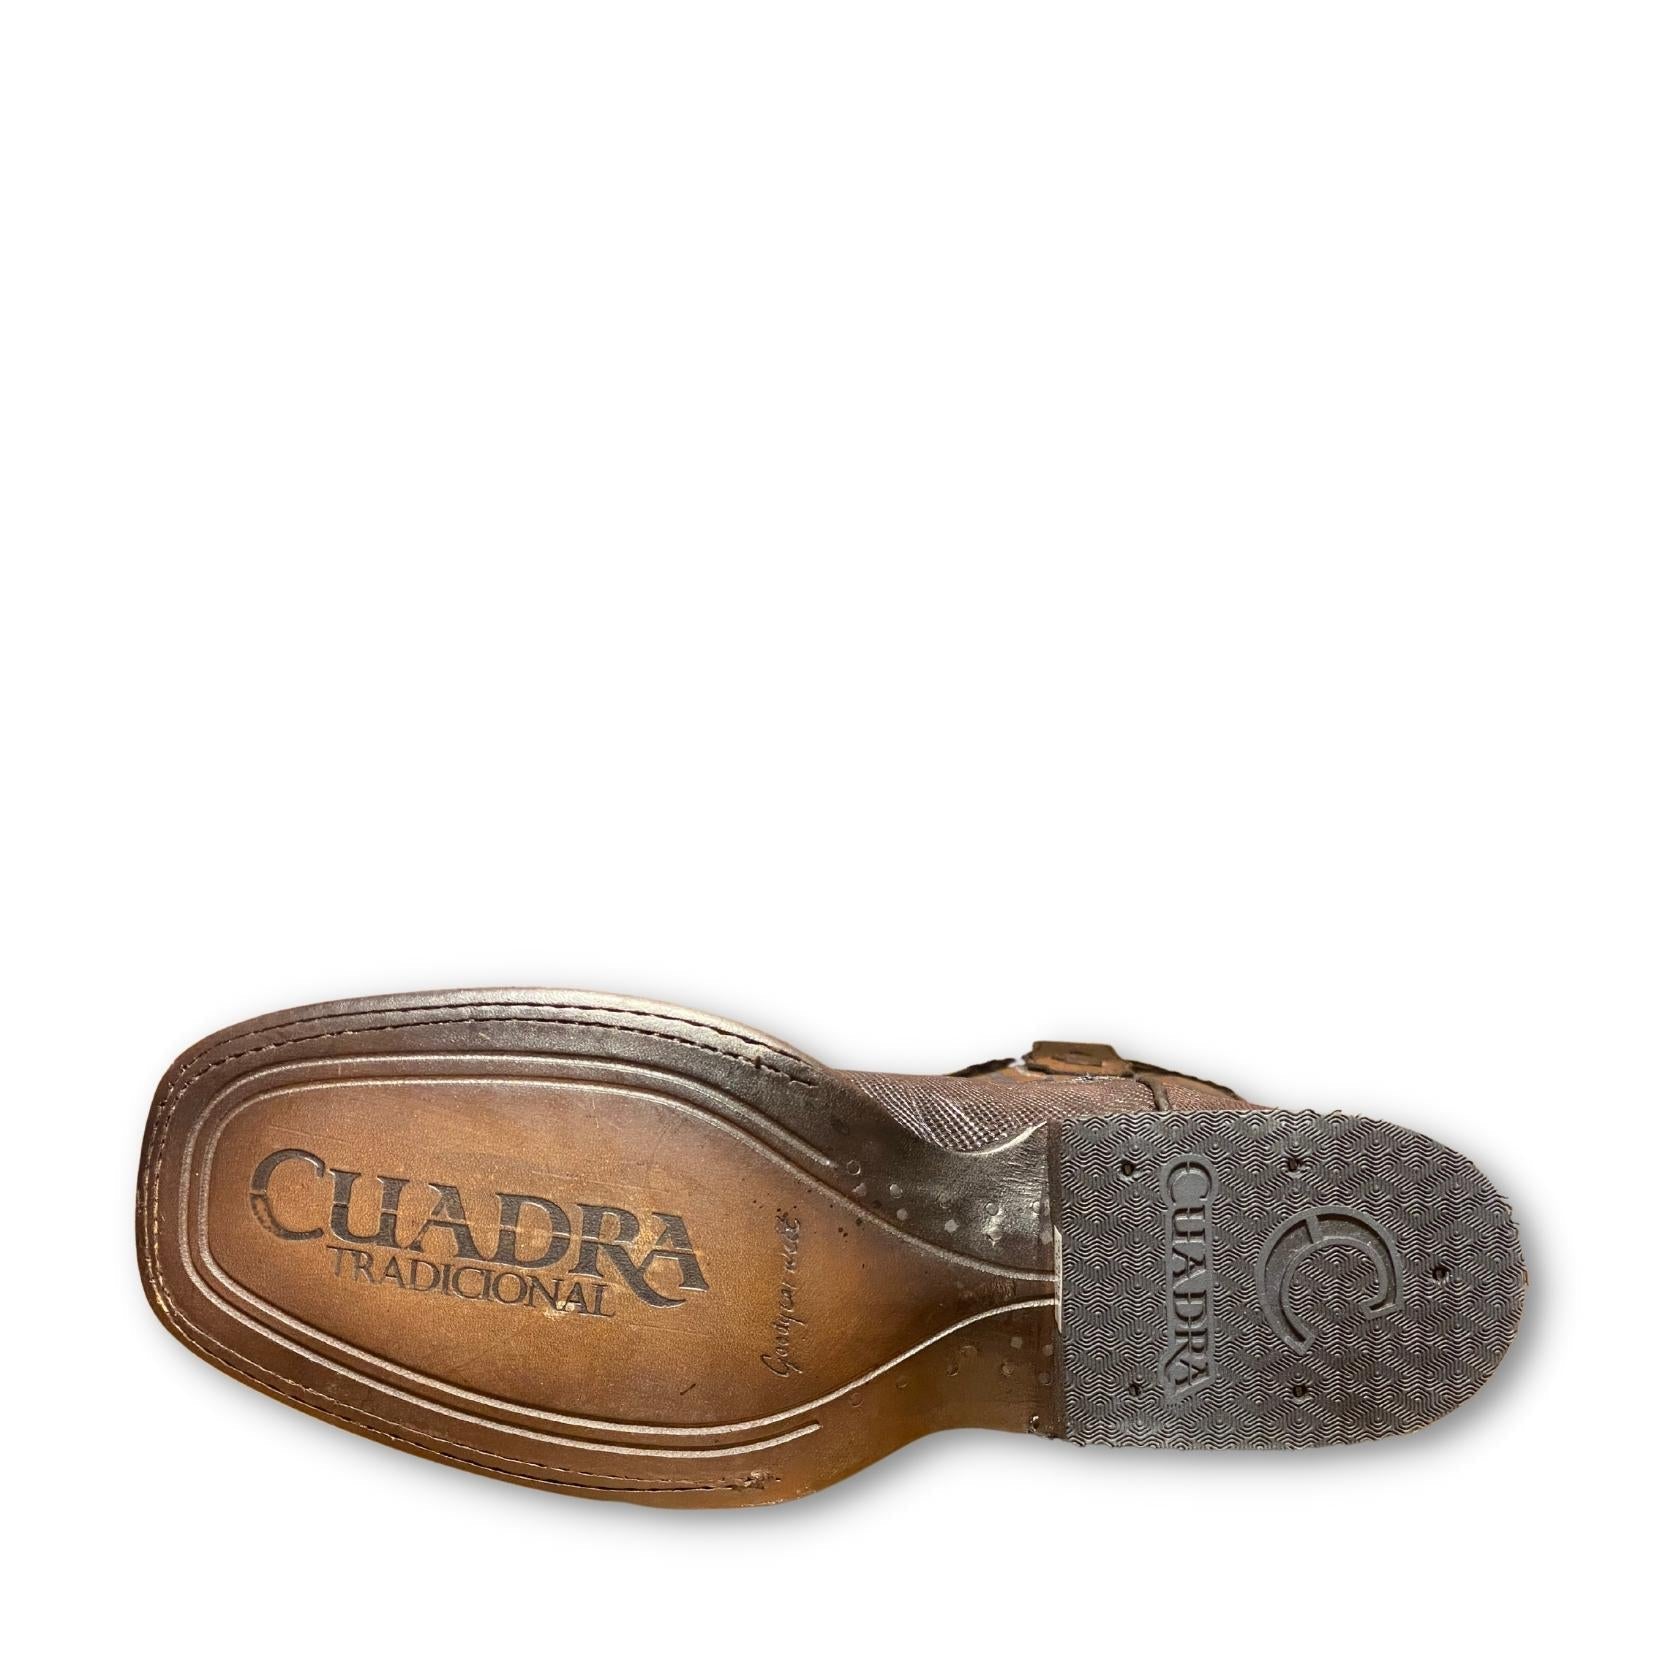 3Z1OLT - Cuadra brown dress cowboy rodeo lizard leather boots for men-Kuet.us